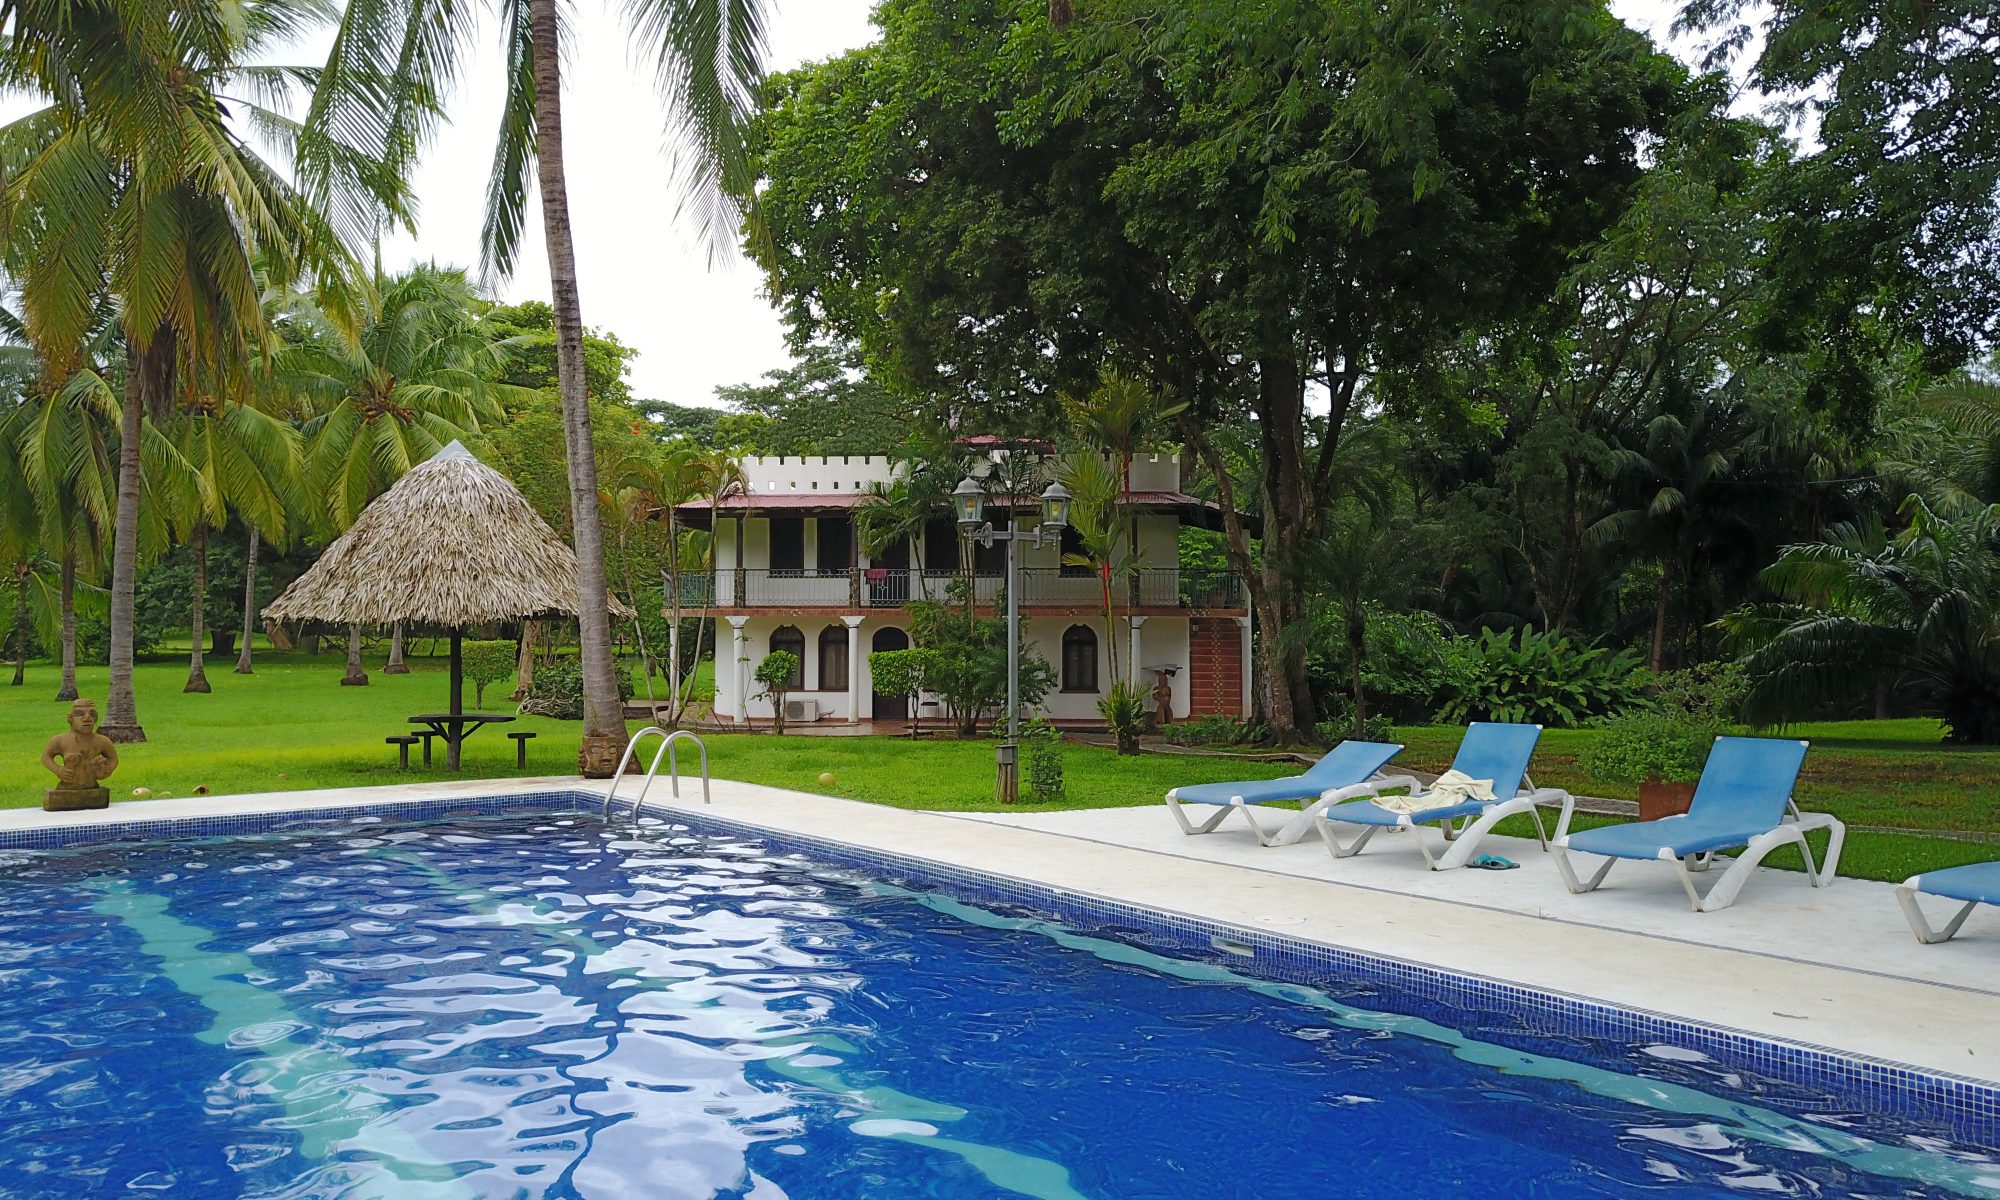 Hotelpool in Sámara, Guanacaste